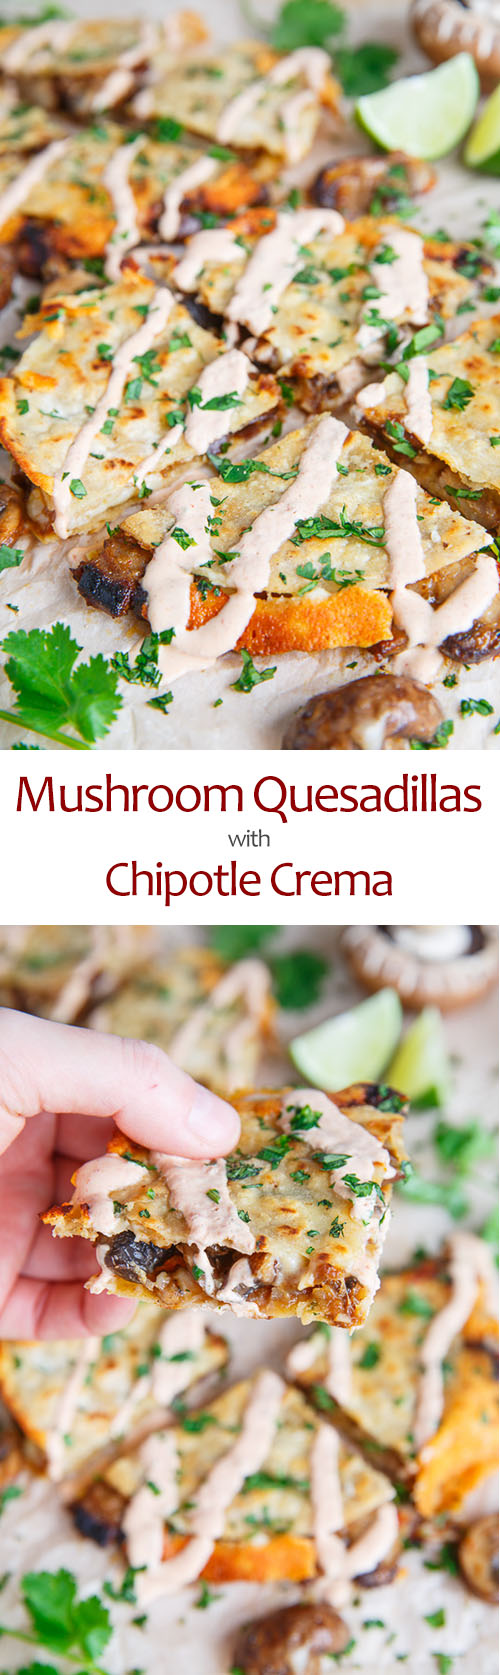 Mushroom Quesadillas with Chipotle Crema